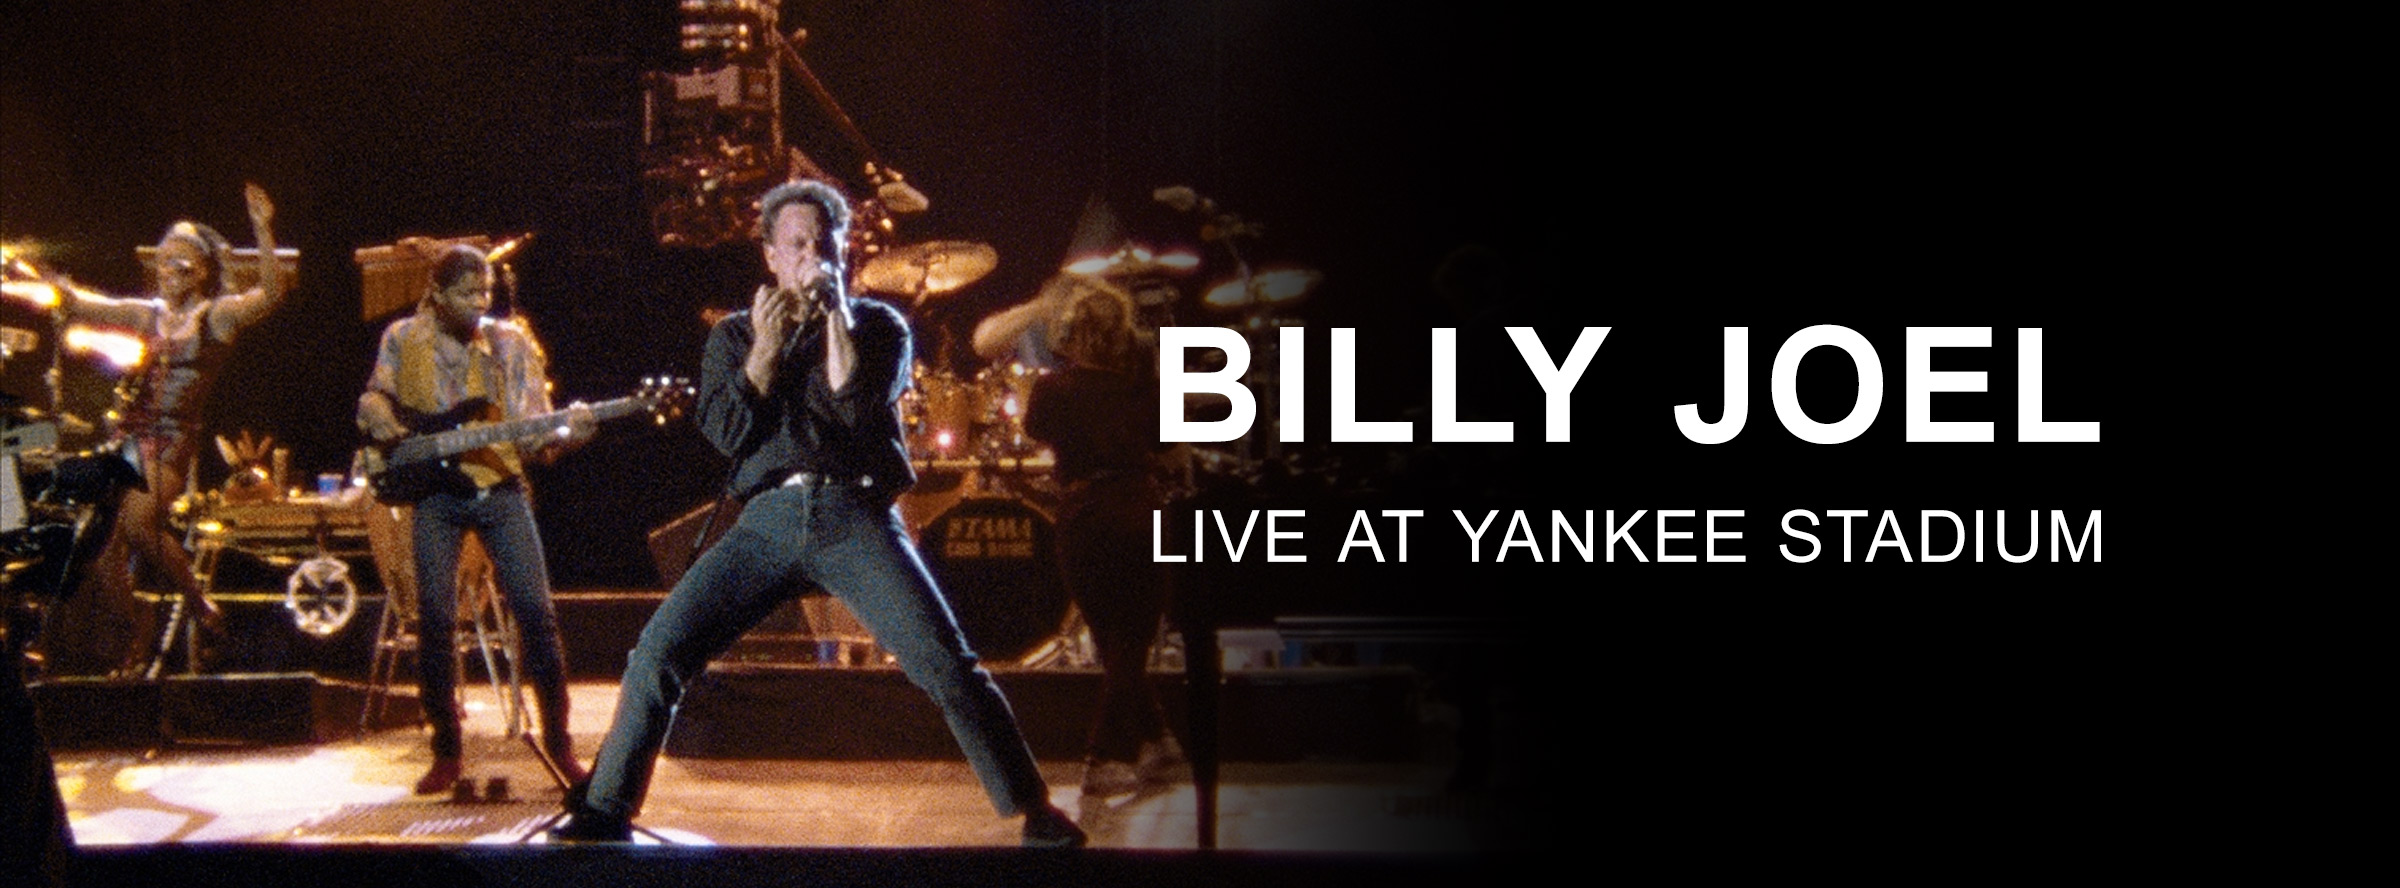 Slider Image for Billy Joel Live at Yankee Stadium